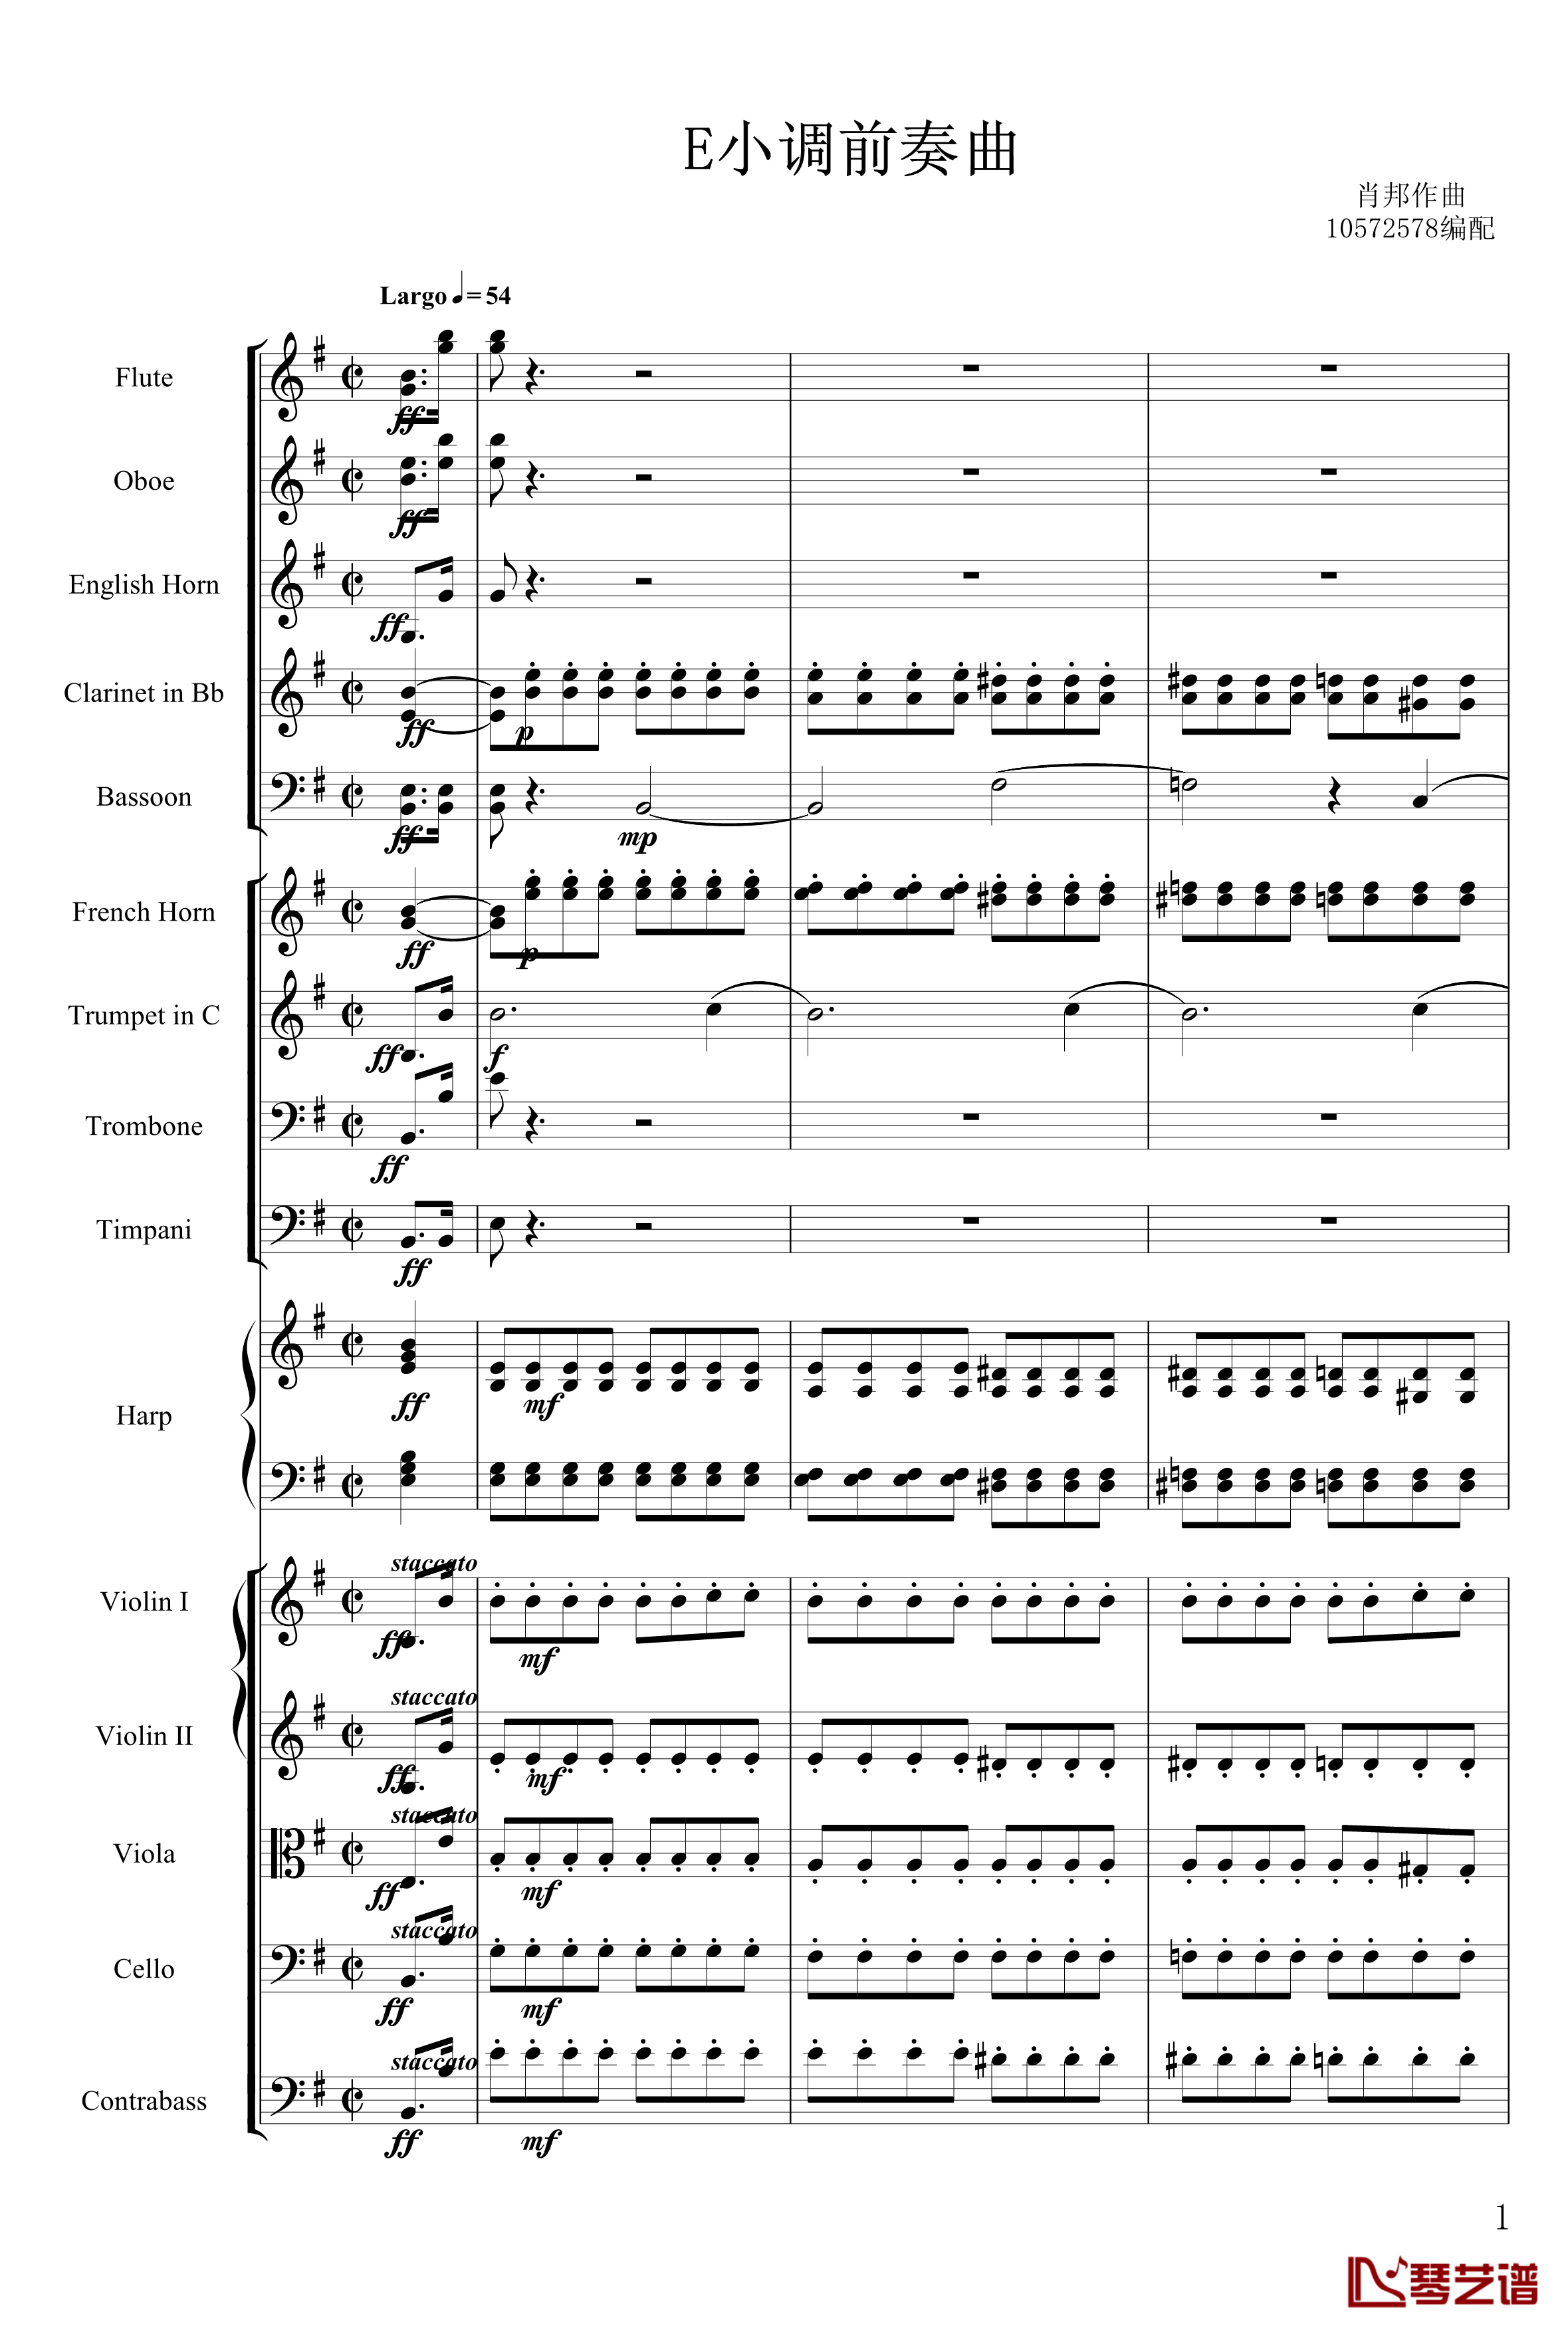 E小调前奏曲钢琴谱-交响乐版-肖邦-chopin1